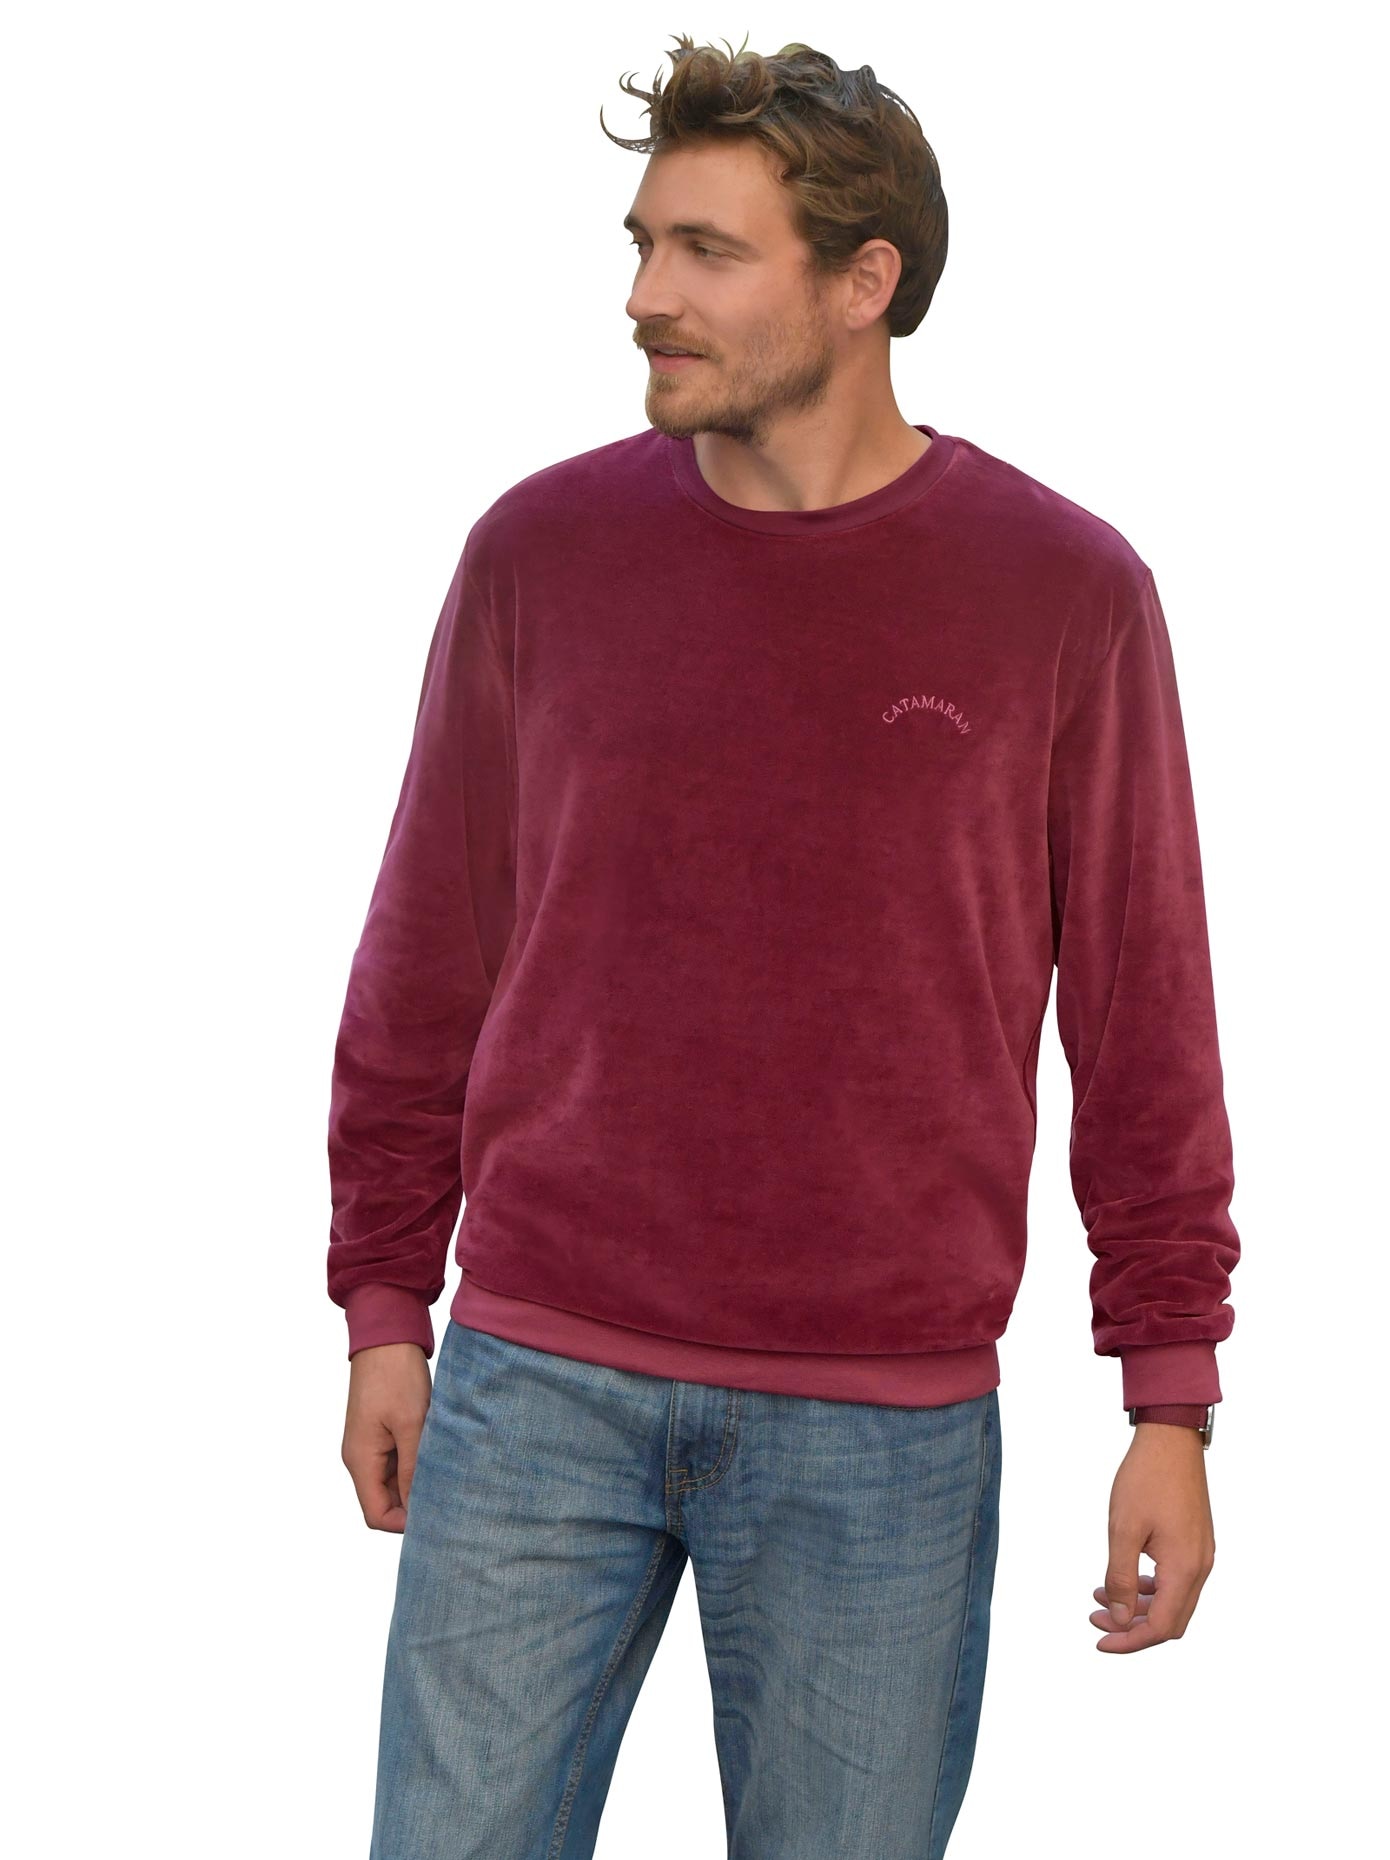 shoppen bei Sweatshirt online RAGMAN OTTO